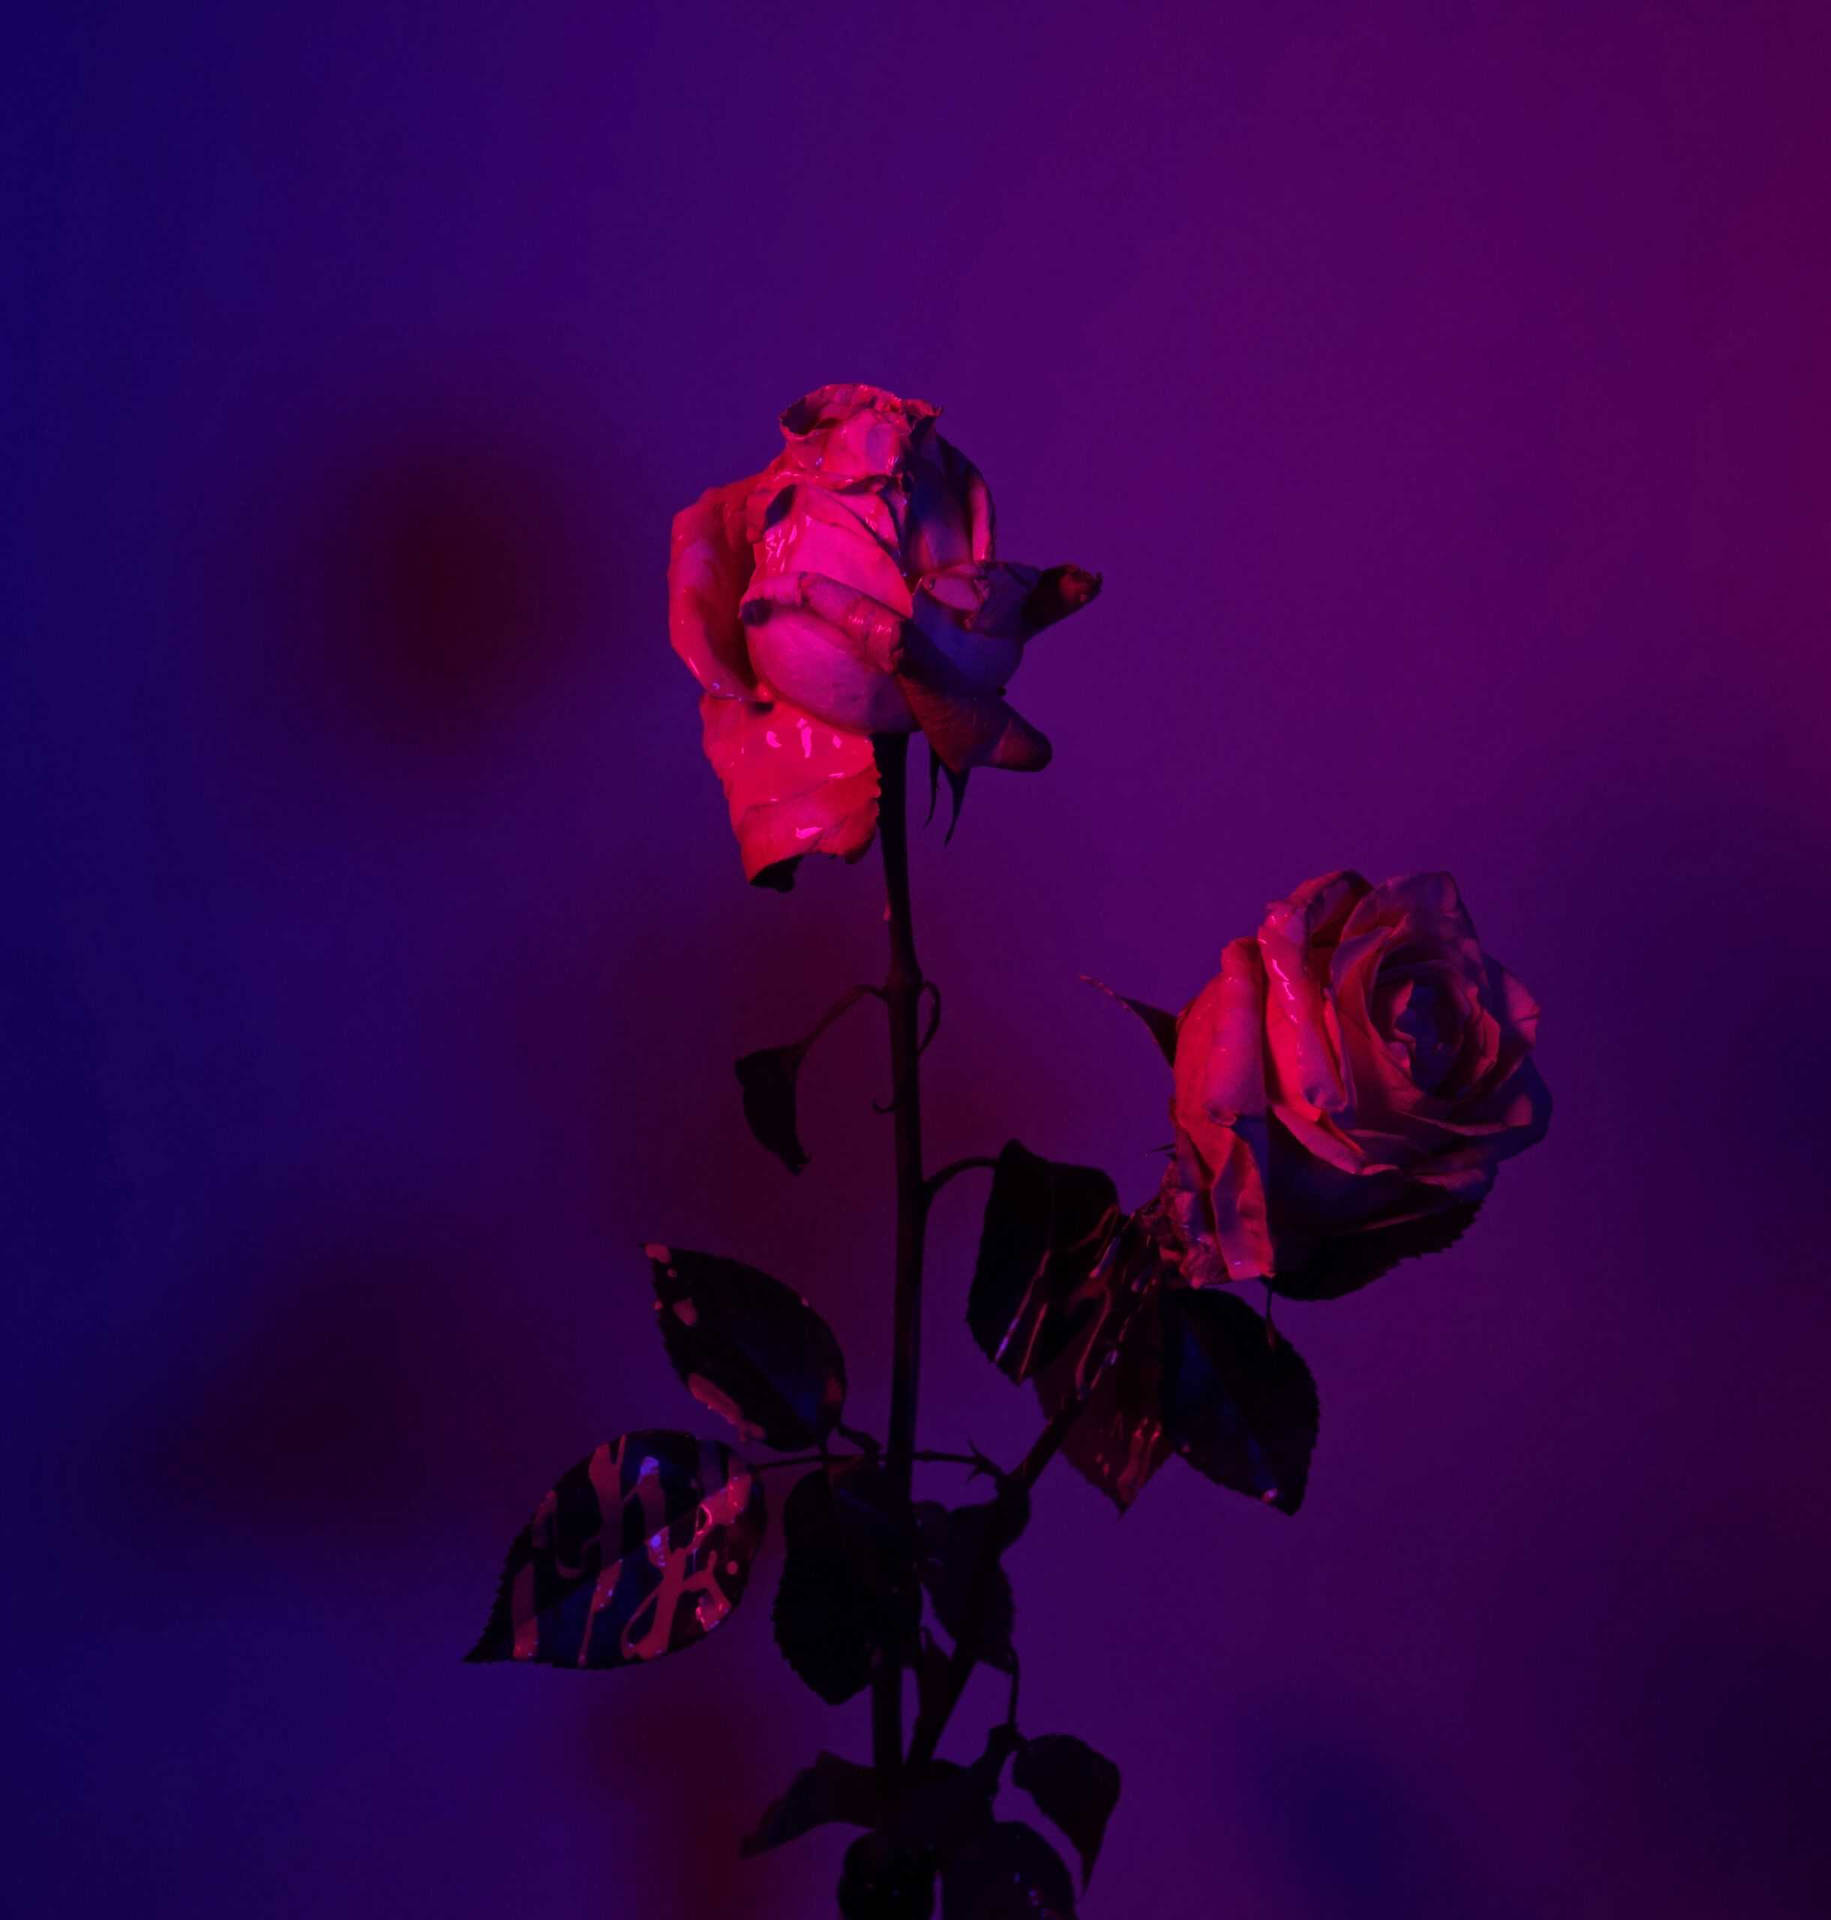 Two Roses In Purple Lighting